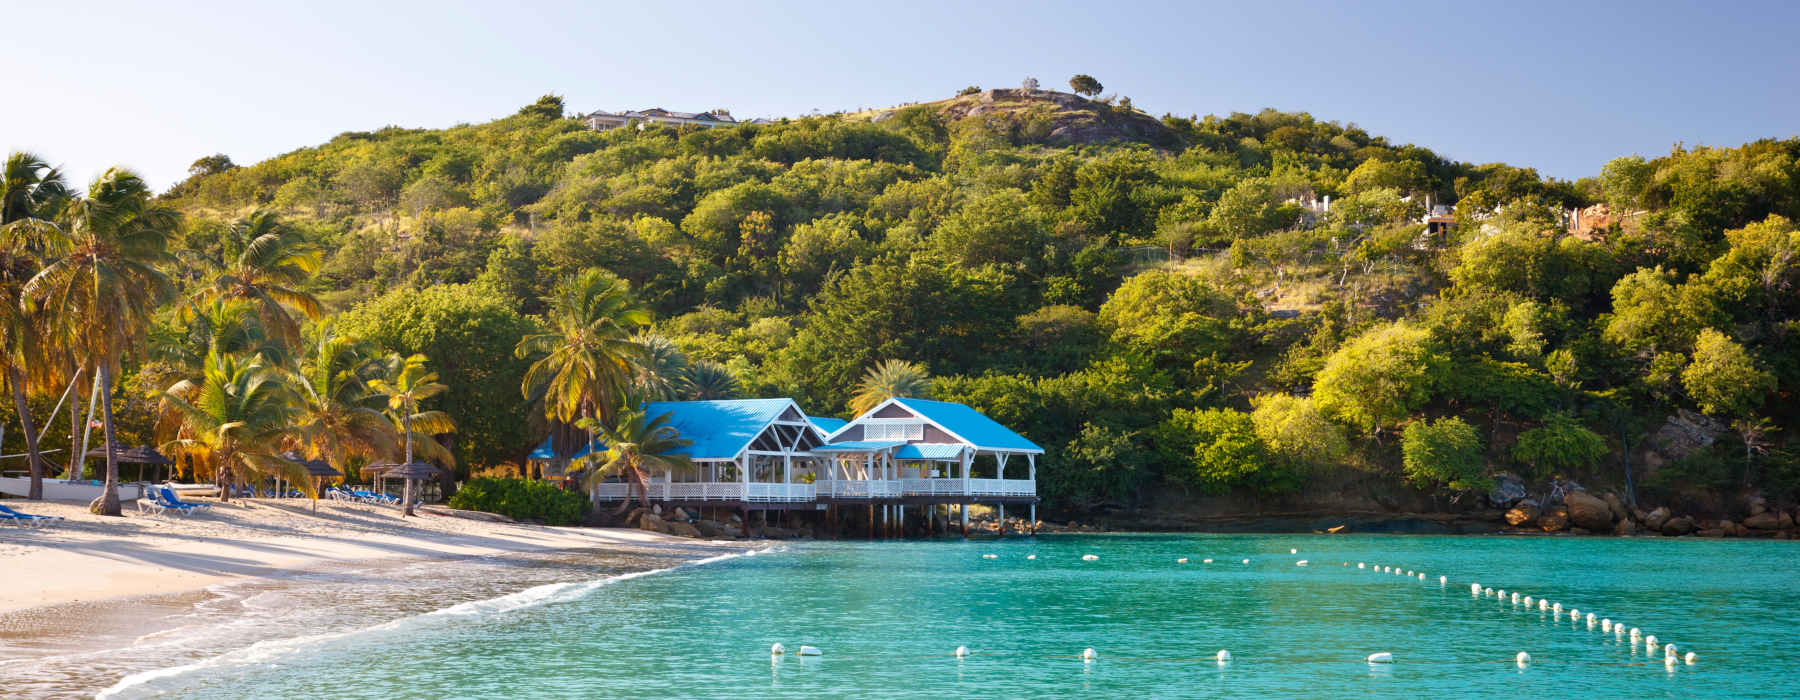 Antigua and Barbuda<br class="hidden-md hidden-lg" /> Family Spring Breaks